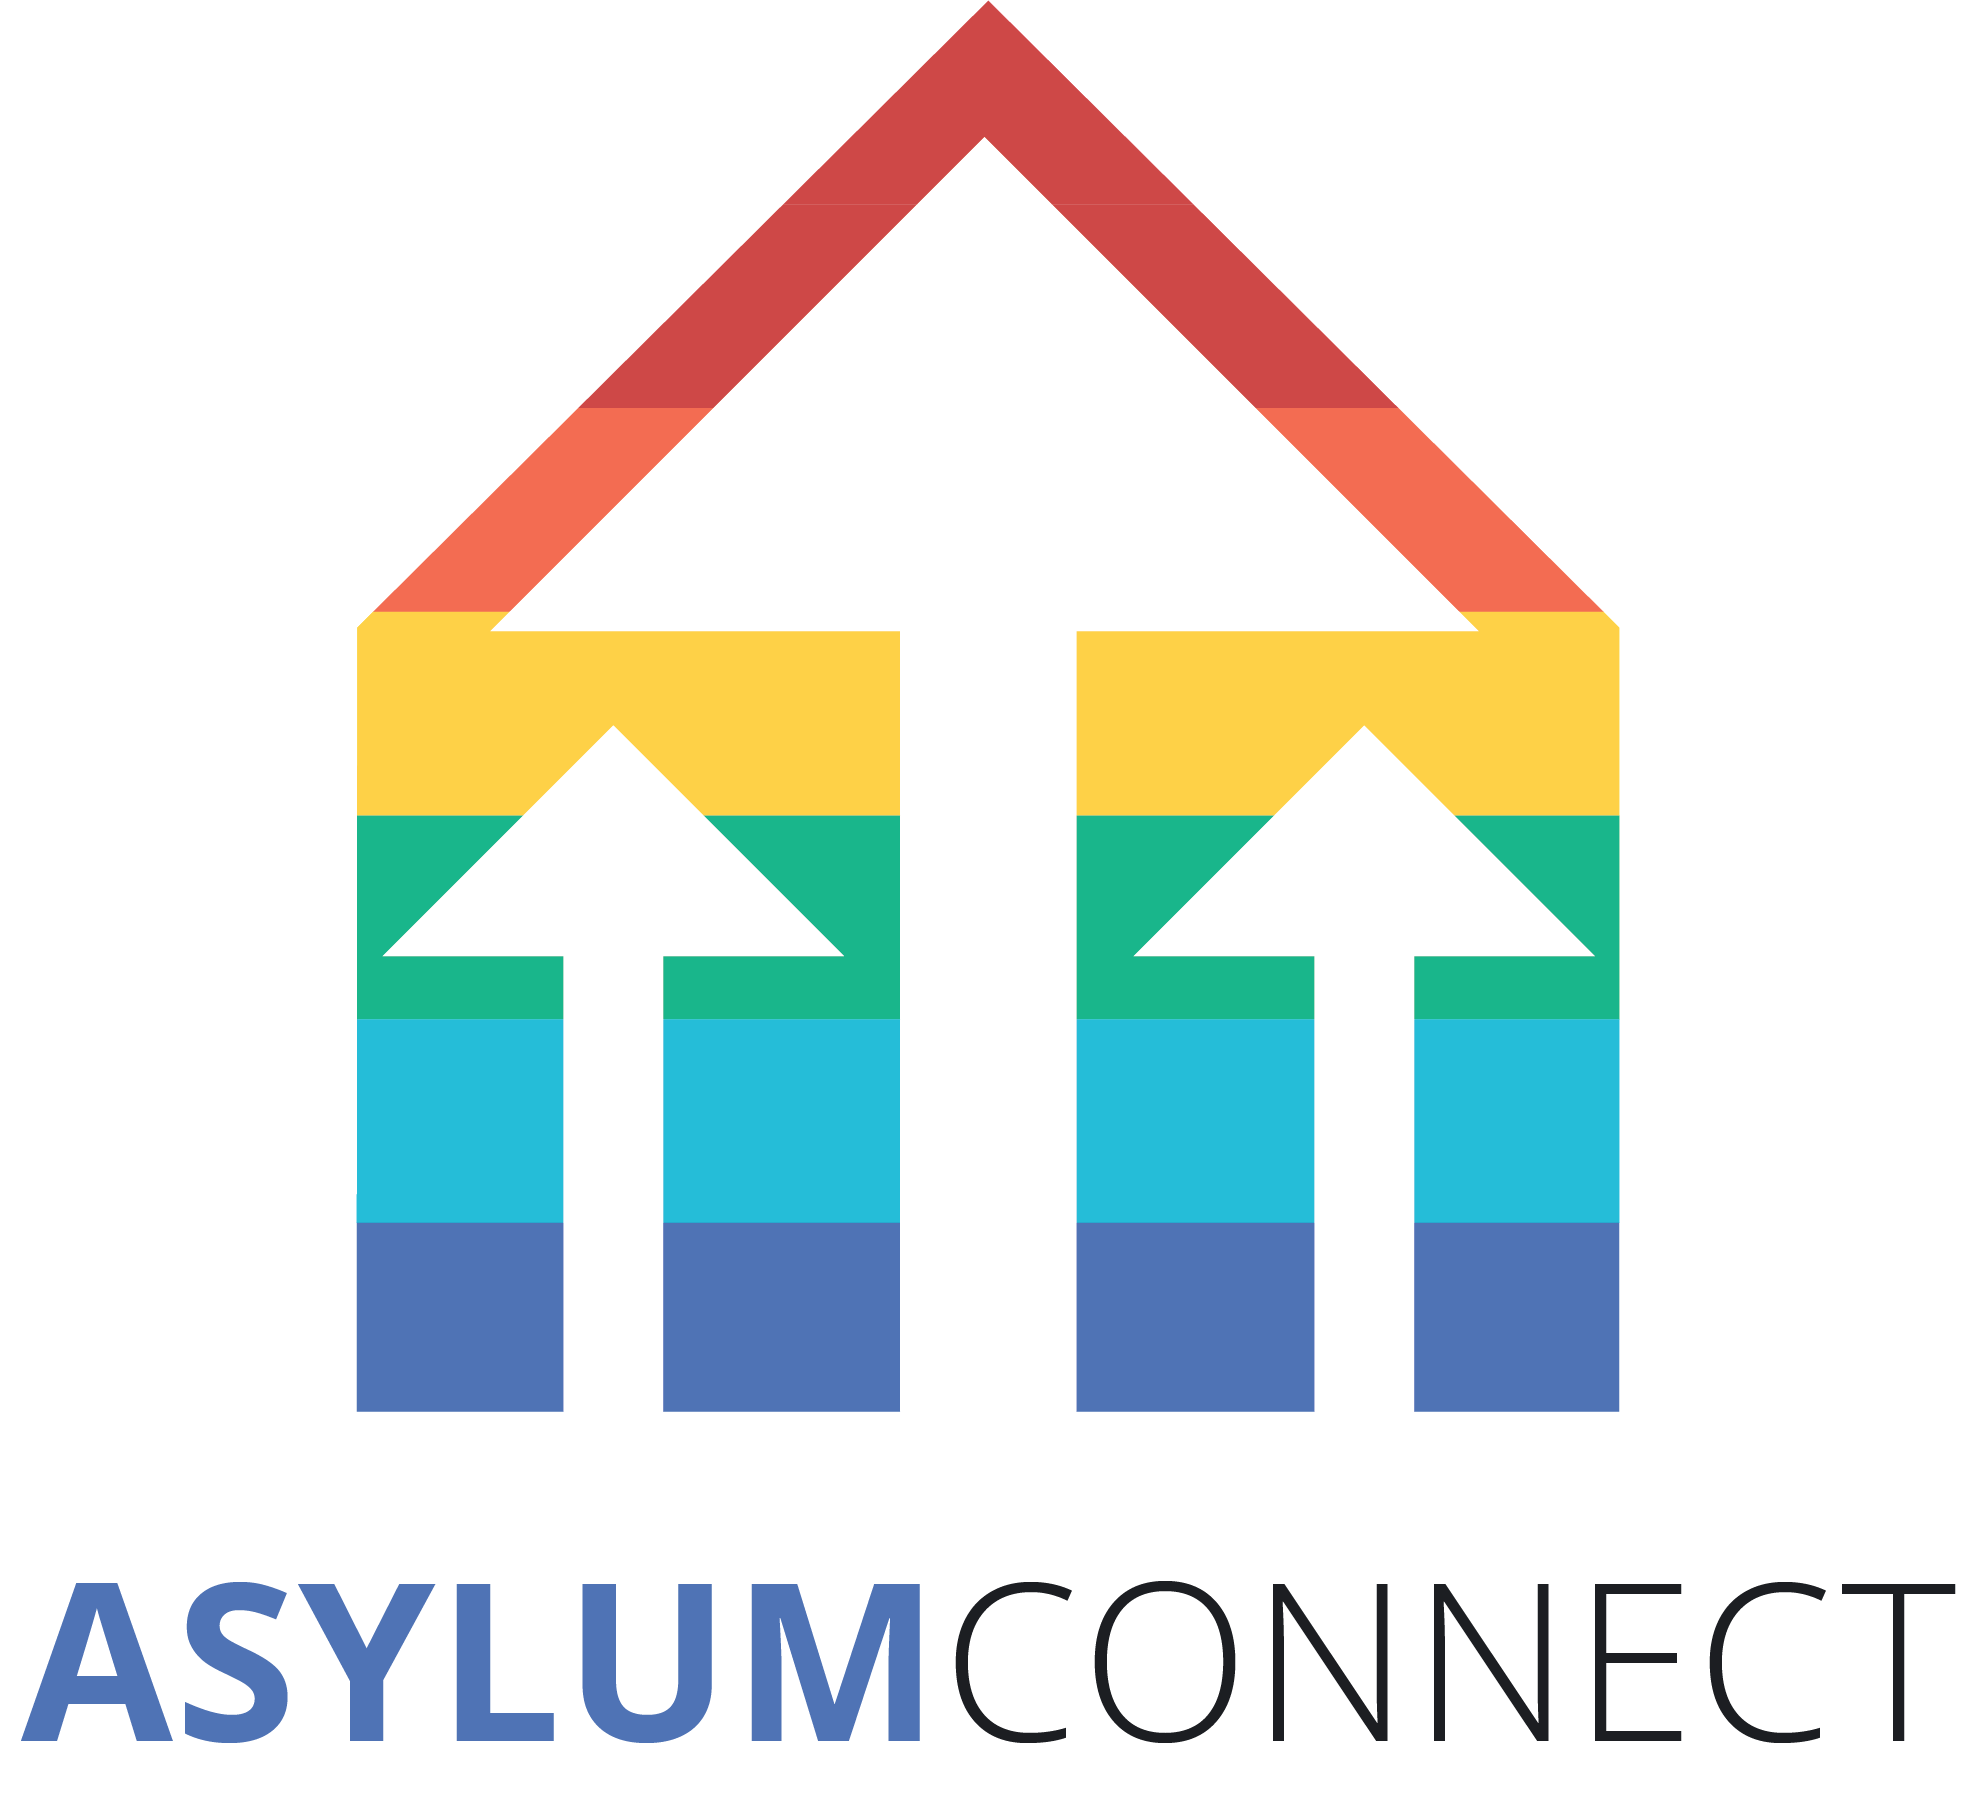 AsylumConnect logo and link